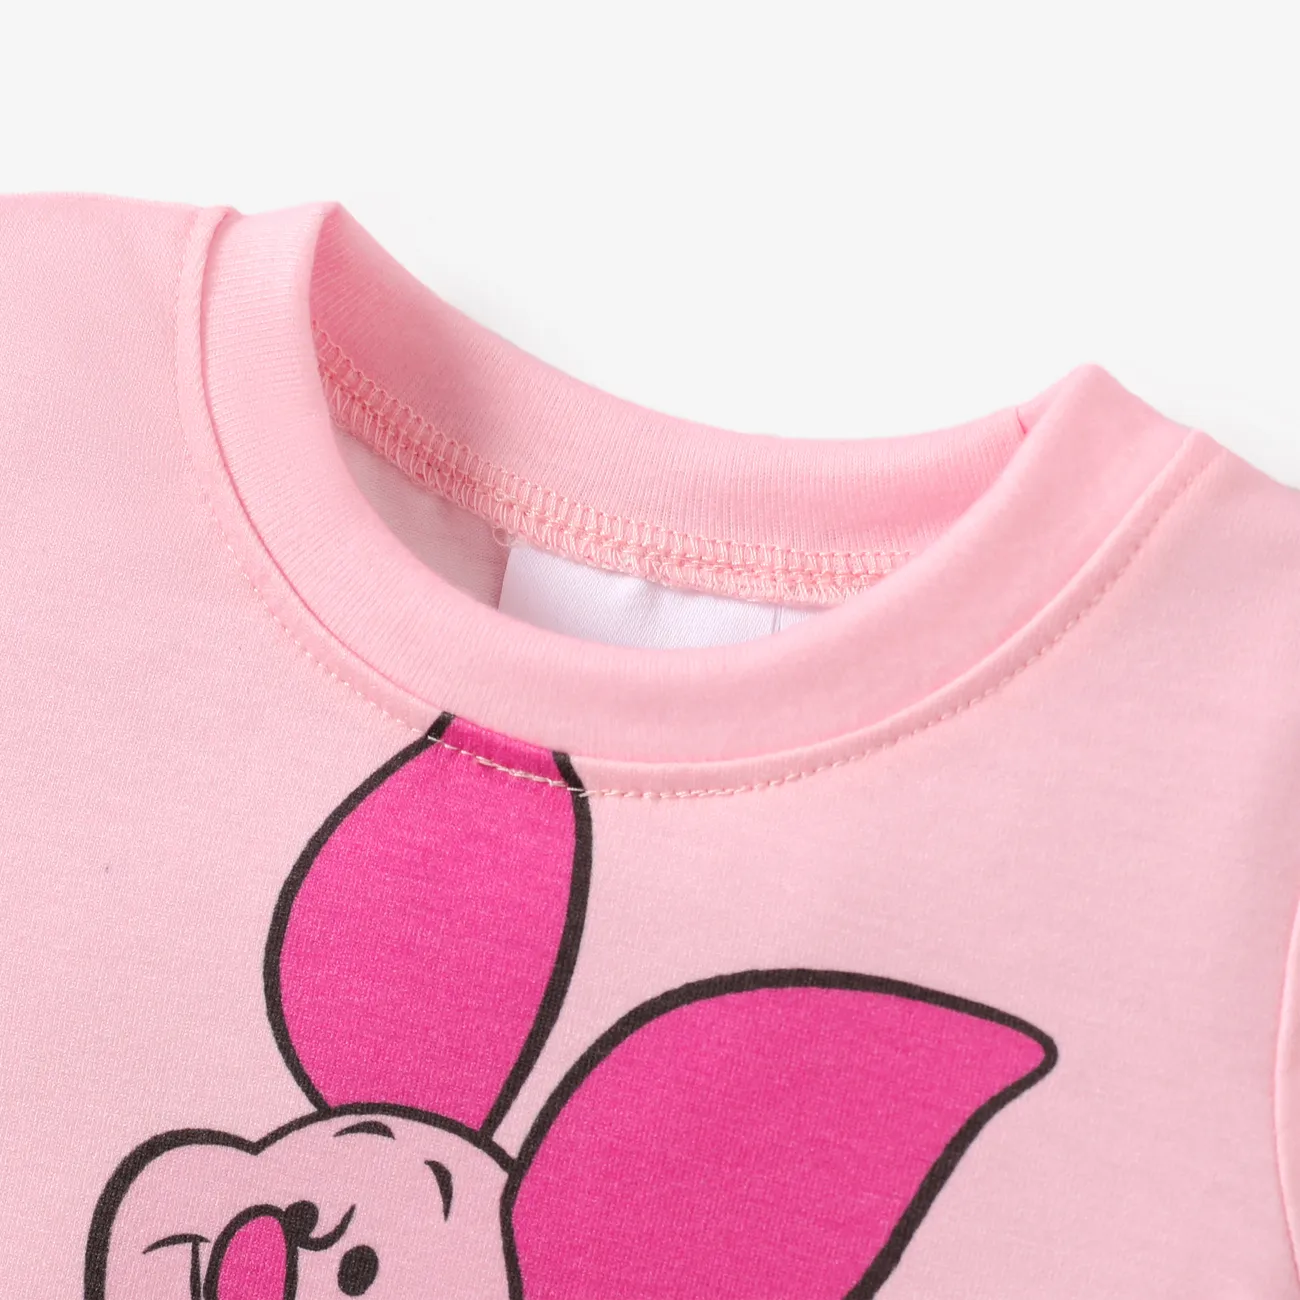 Disney Winnie the Pooh 2pcs Easter Baby/Toddler Boy/Girl Character Naia™ Print Tee and Shorts Set
 Pink big image 1